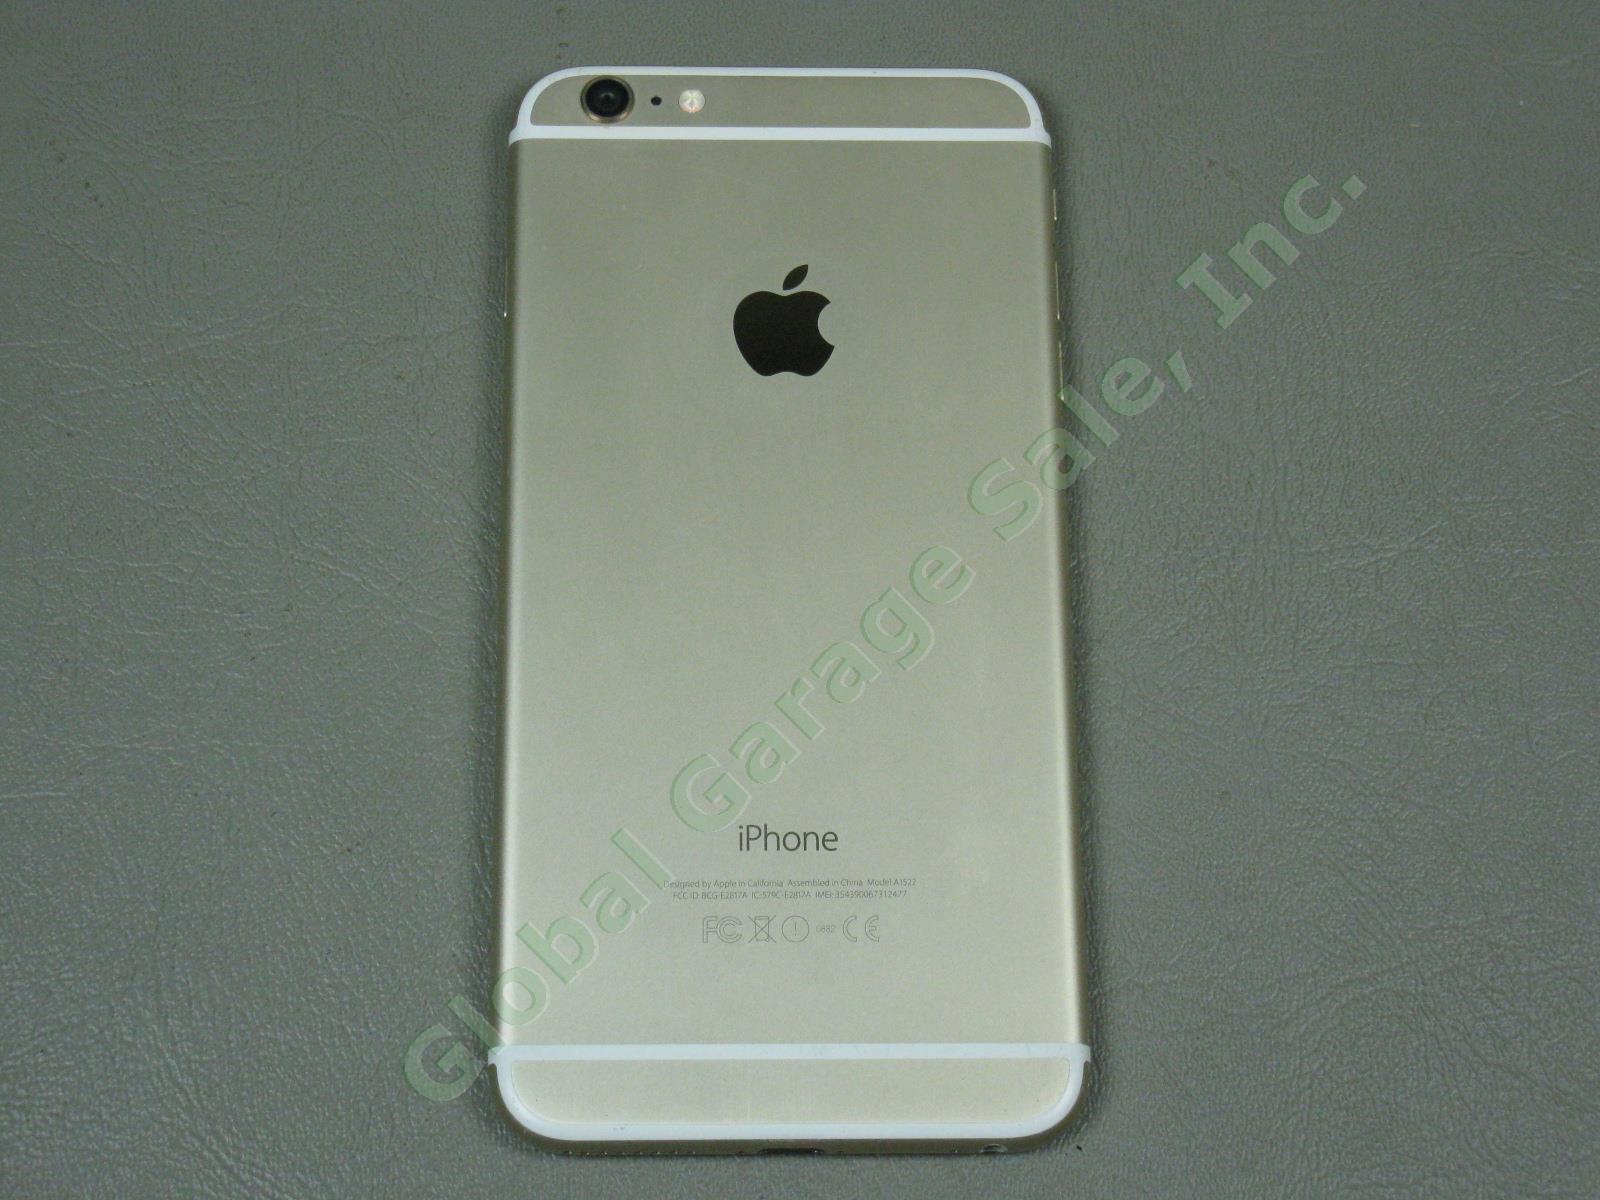 Apple iPhone 6 Plus Black 128GB A1522 MGCQ2LL/A Verizon Works Great No Reserve! 3